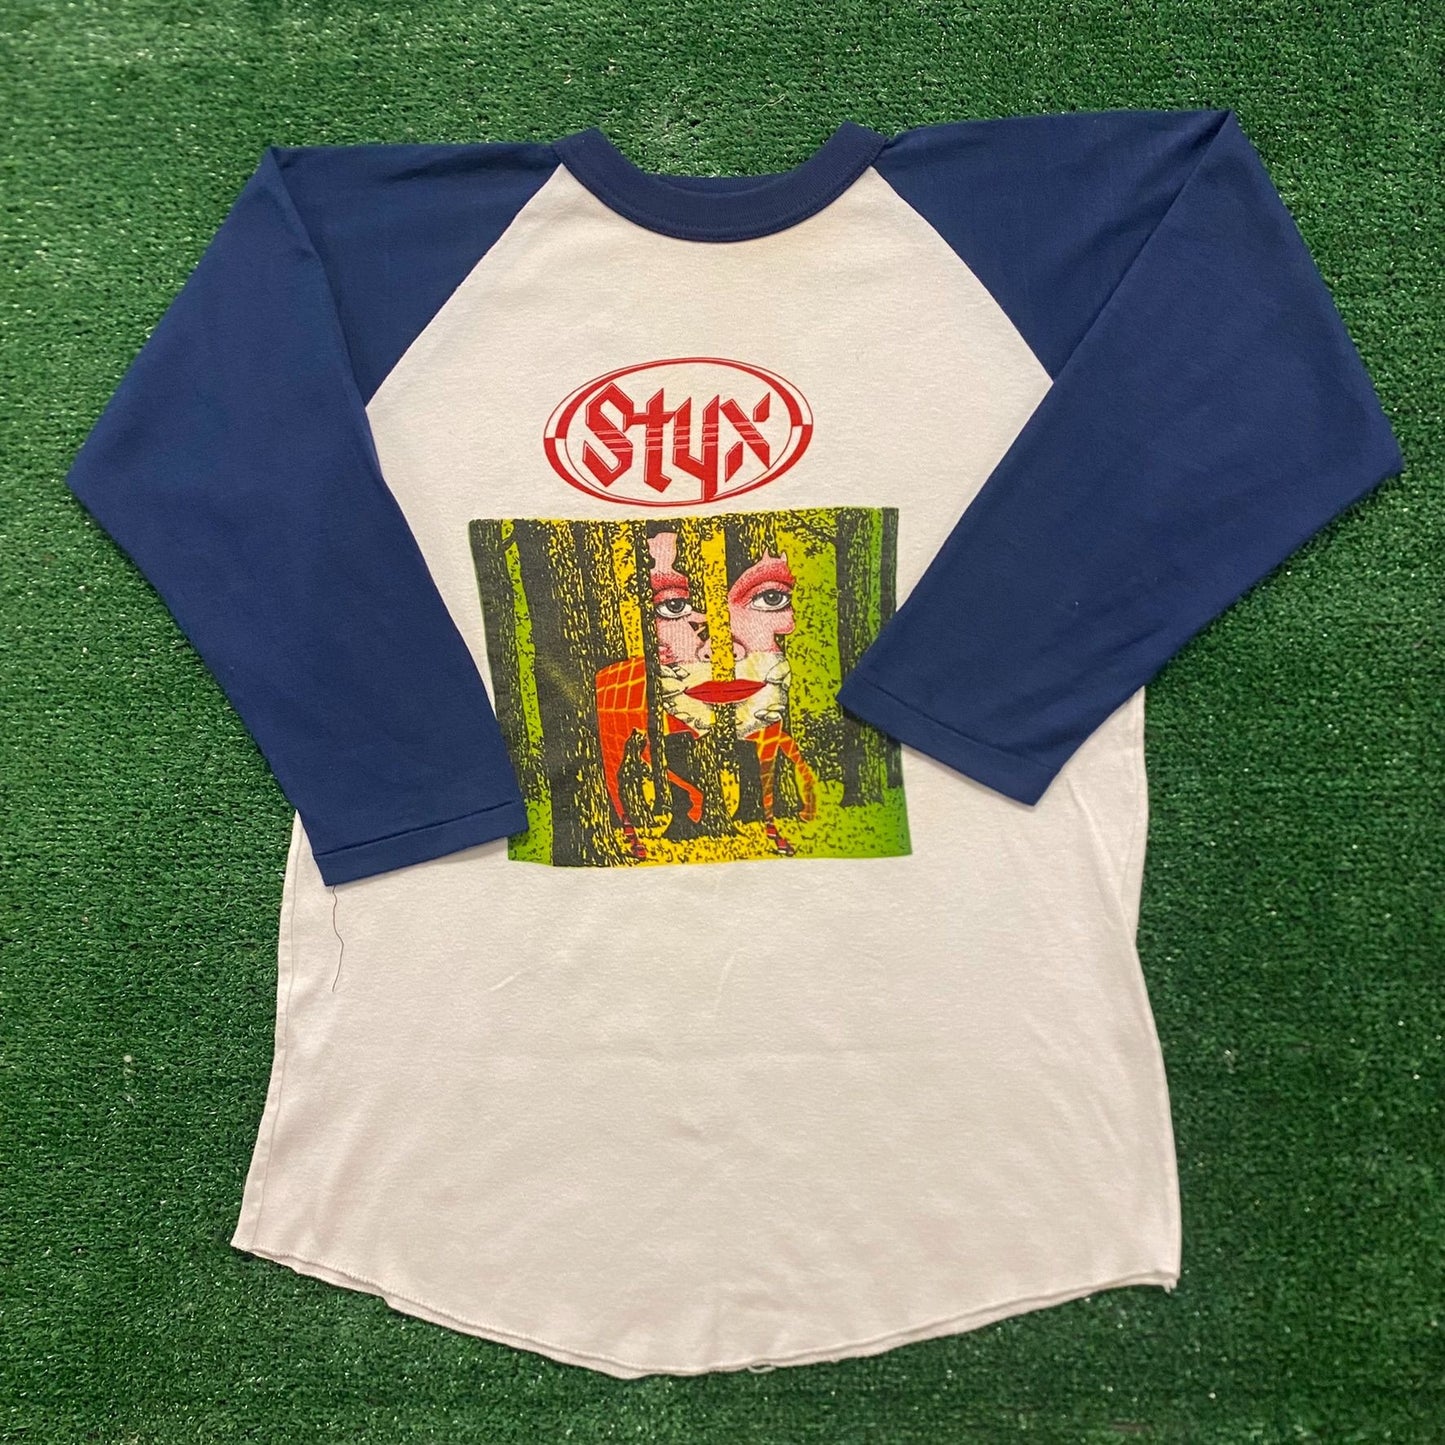 Styx Vintage 90s Rock Band T-Shirt